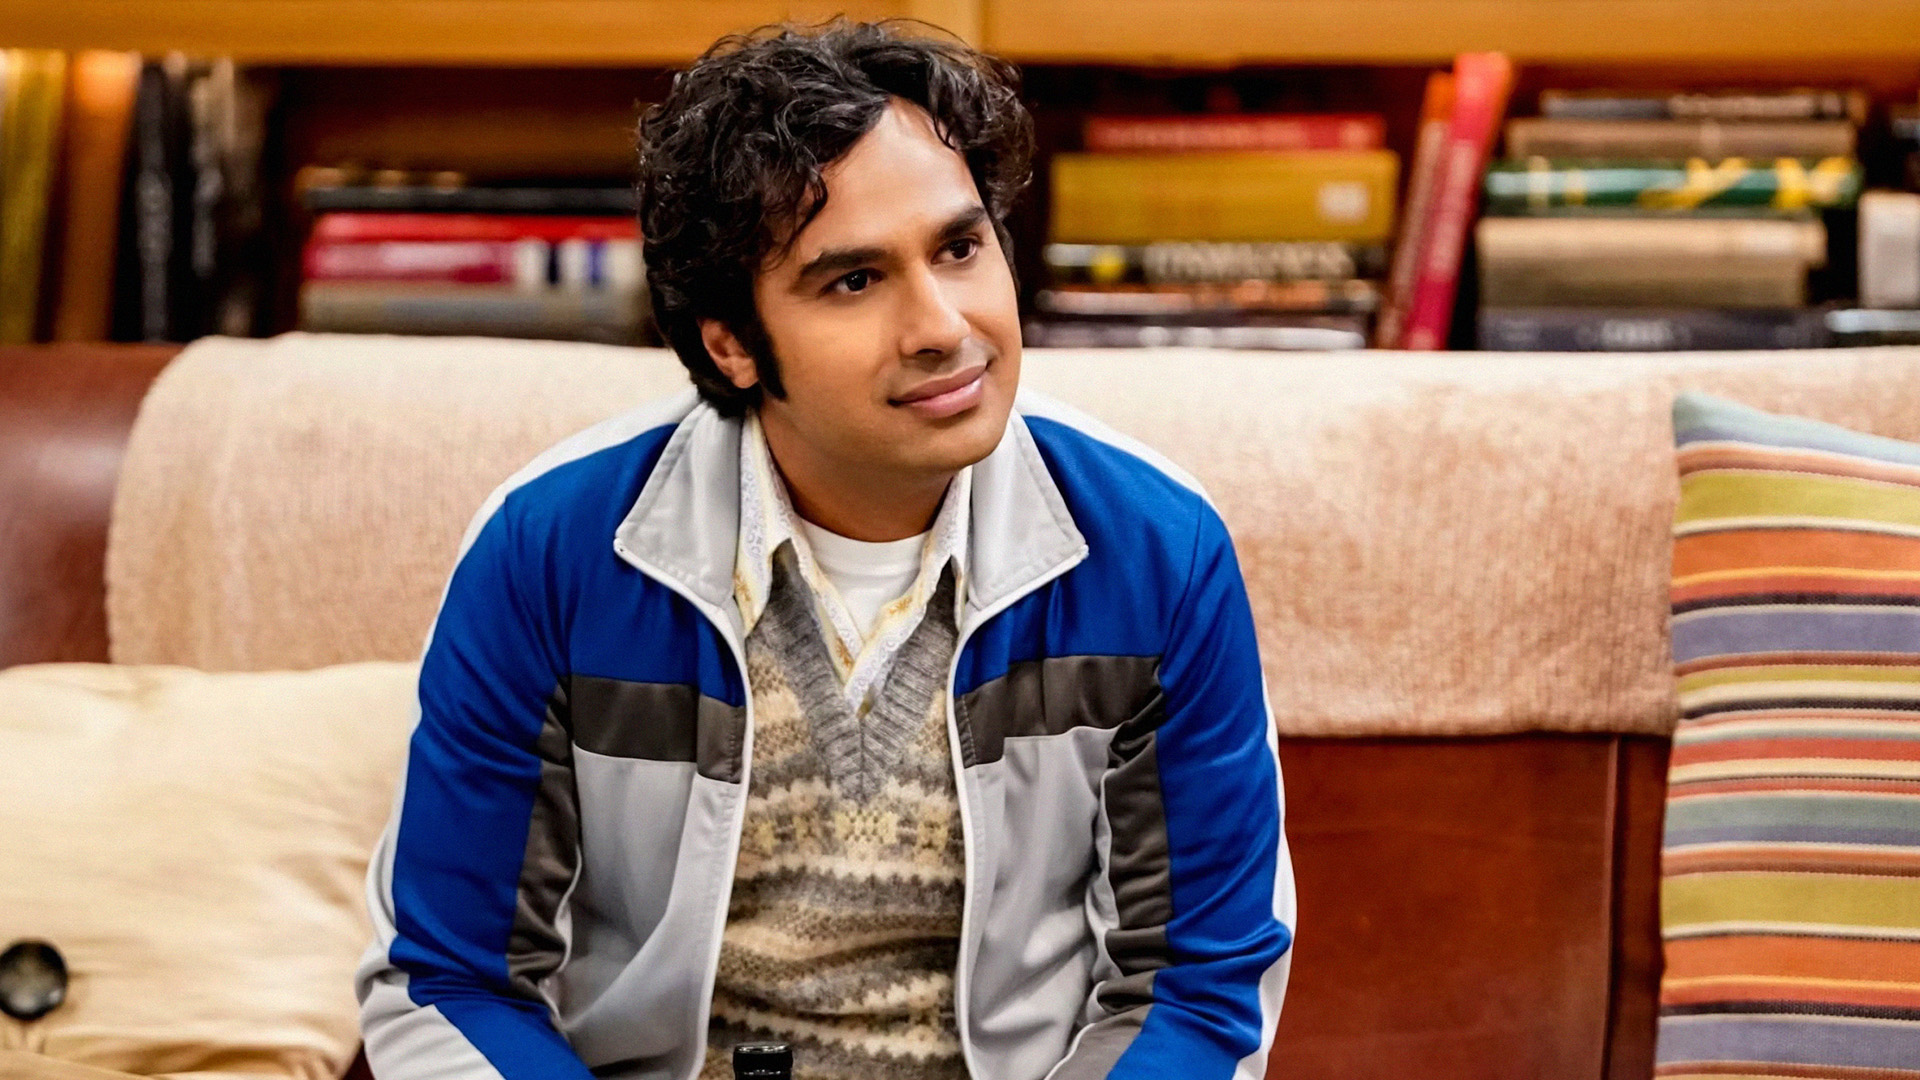 Raj Labelled as Most Annoying Big Bang Theory Character